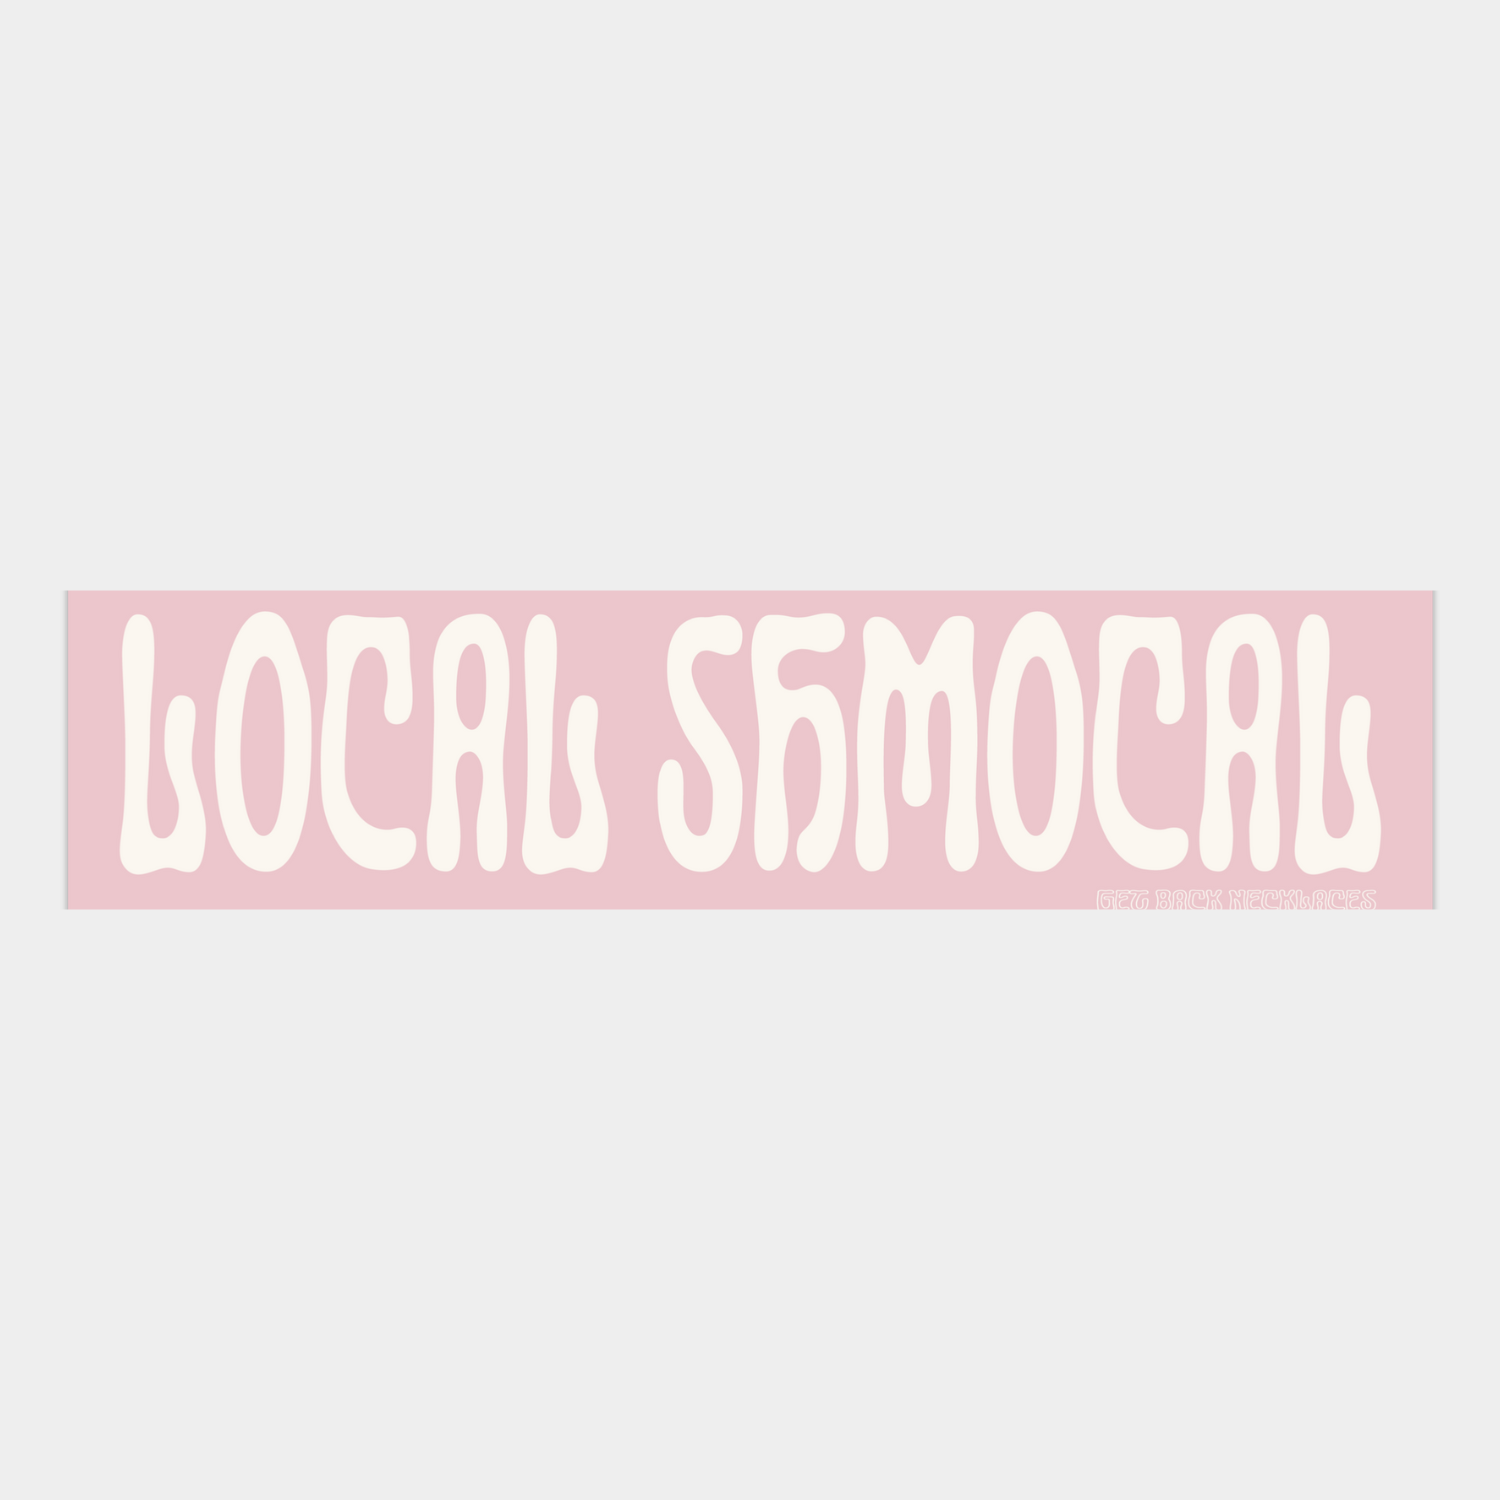 Local Shmocal Bumper Sticker